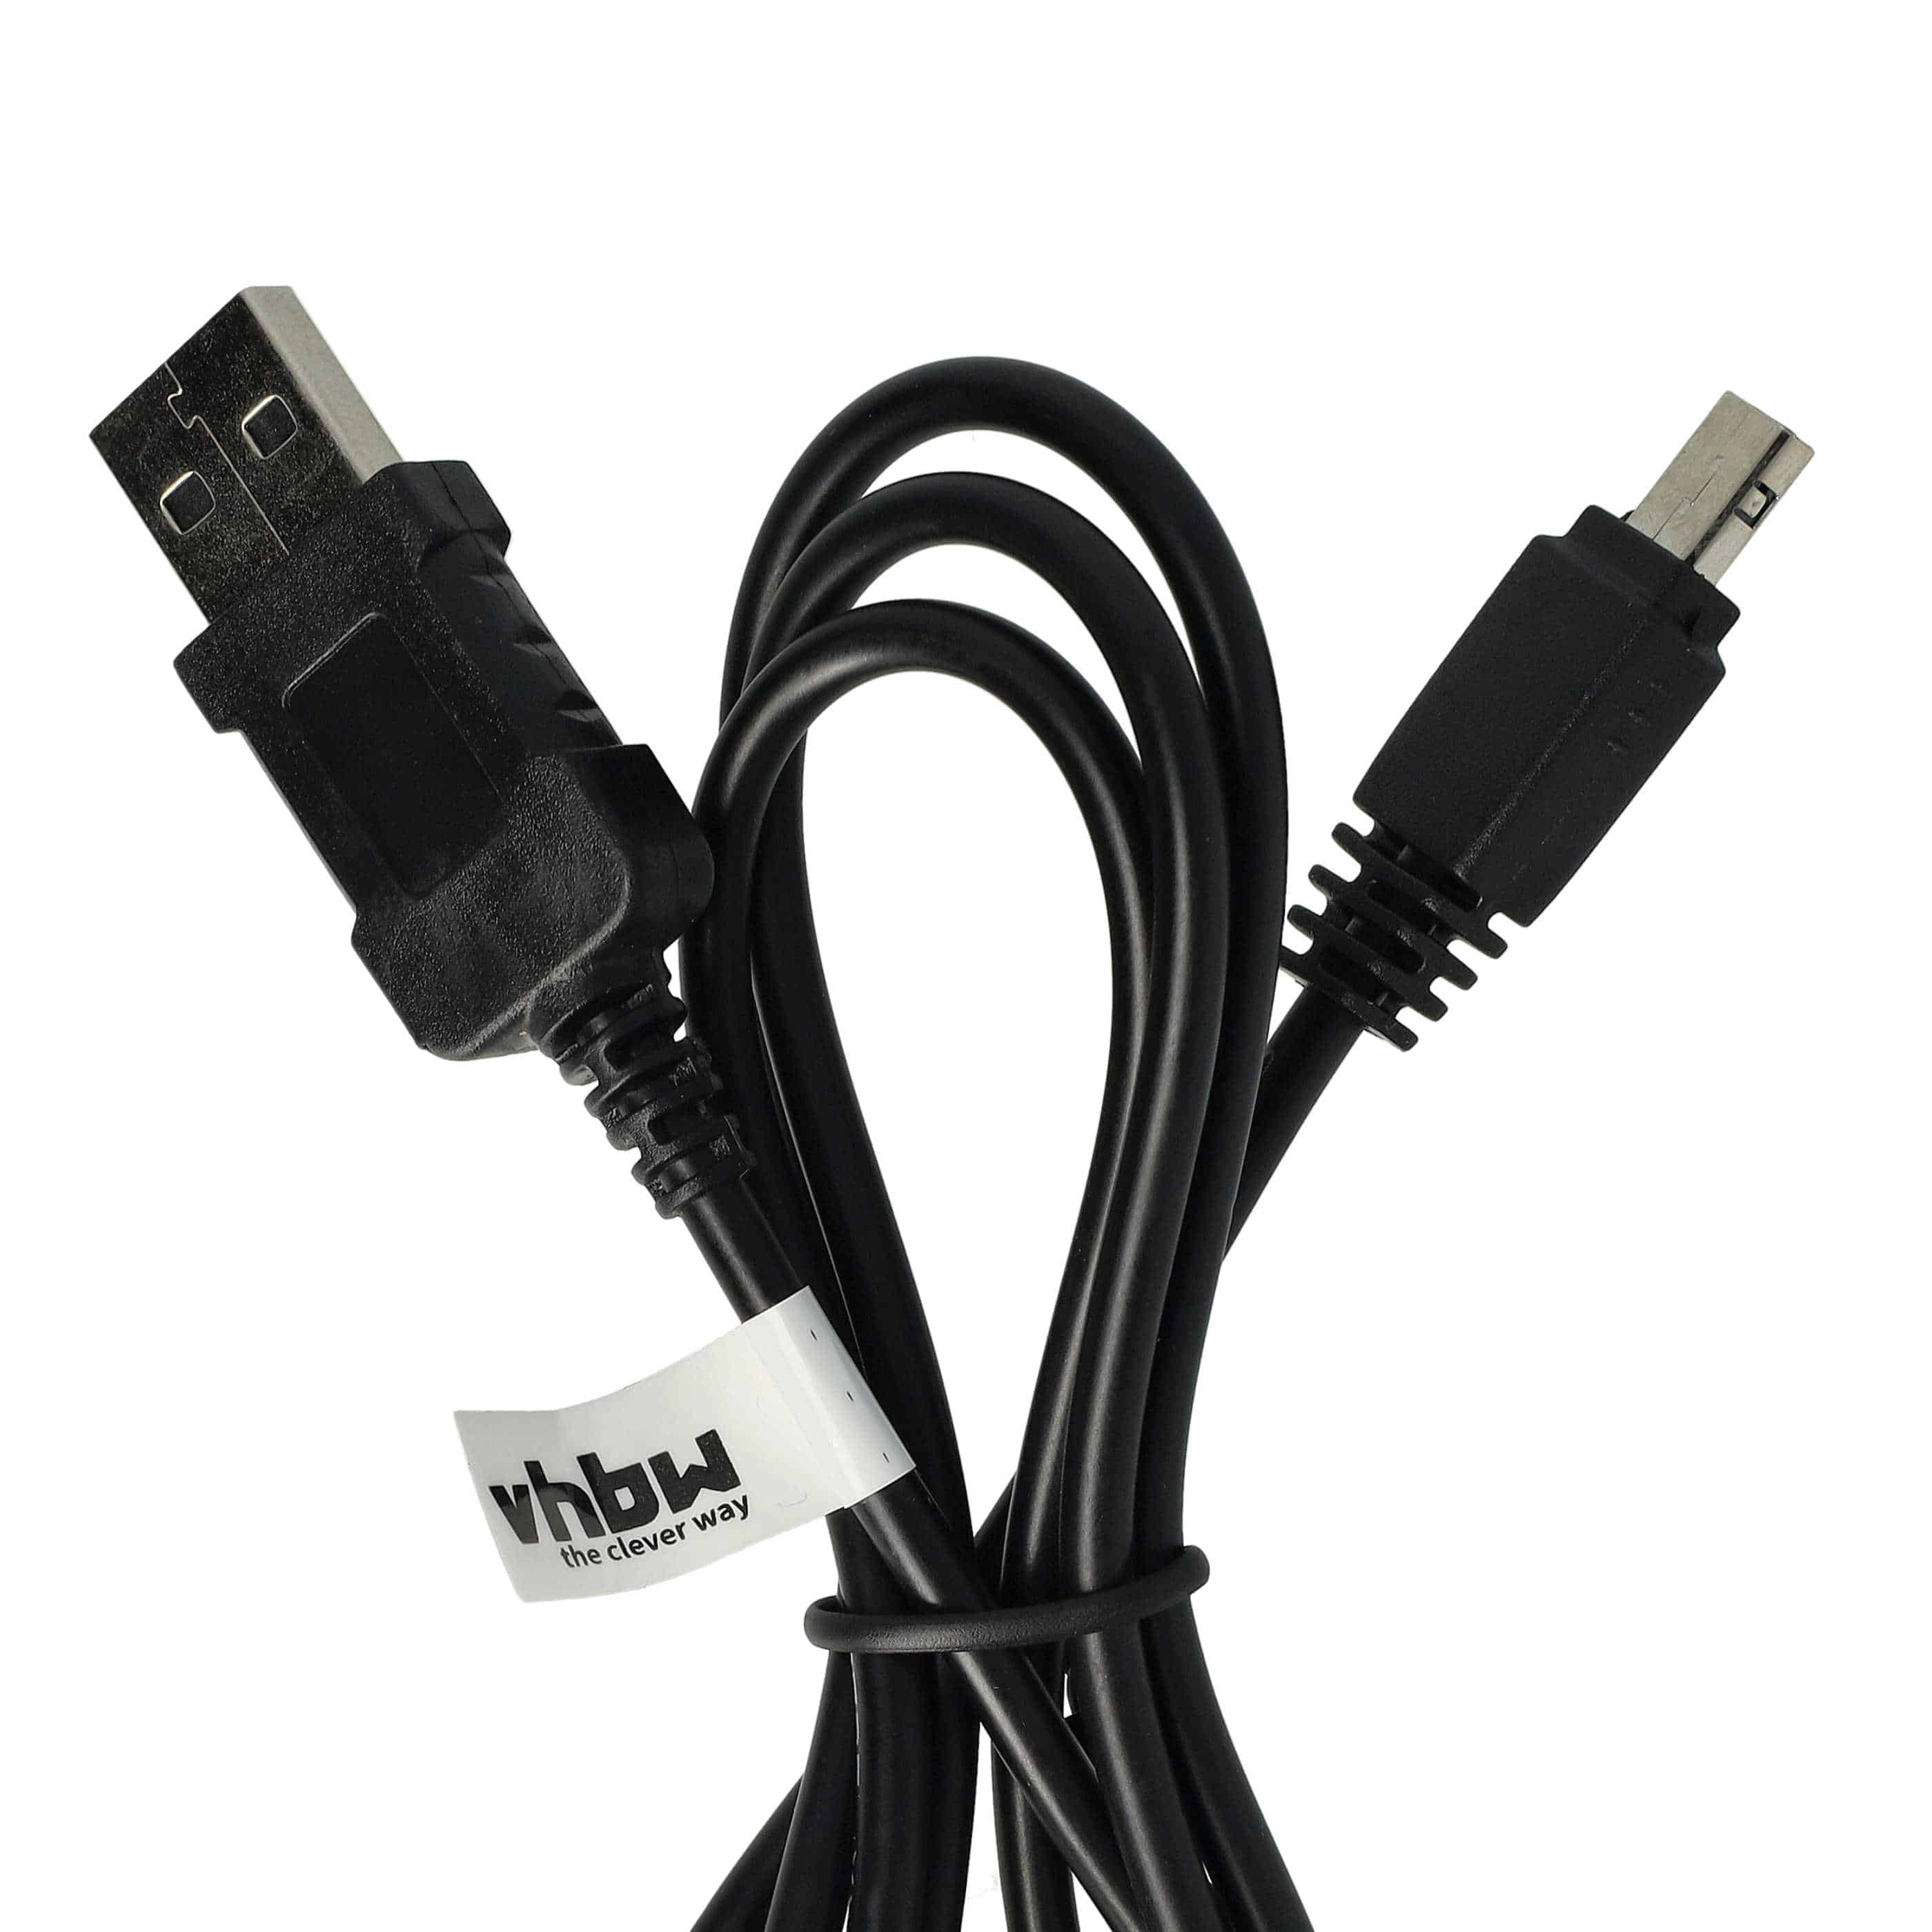 Kabel USB do aparatu Casio zamiennik Casio U-8, EMC-6U, EMC-6 - 100 cm 